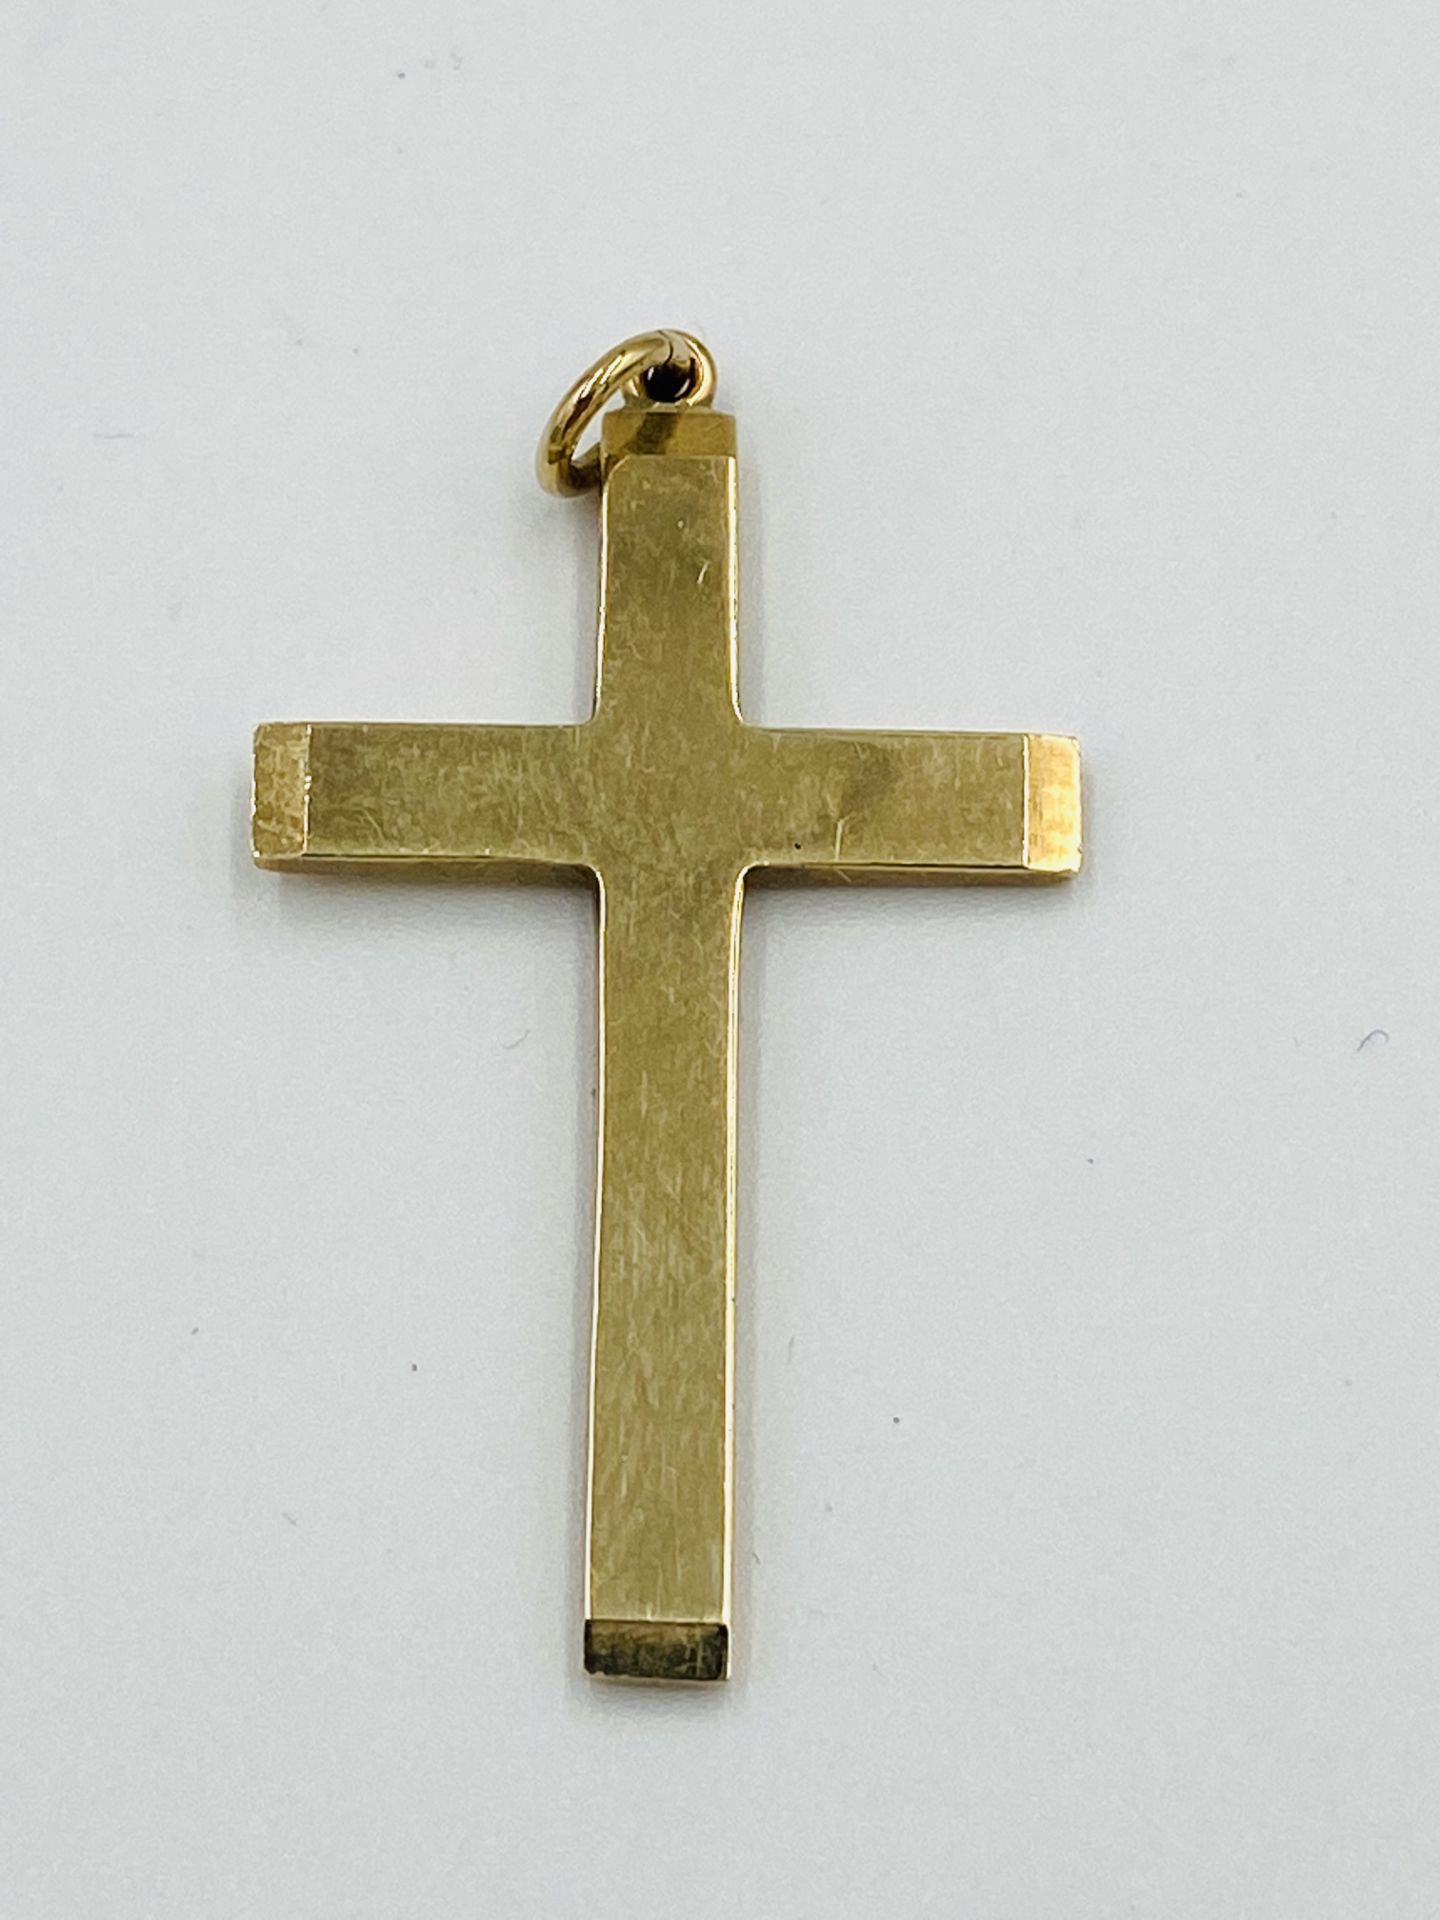 9ct gold cross pendant - Image 3 of 3